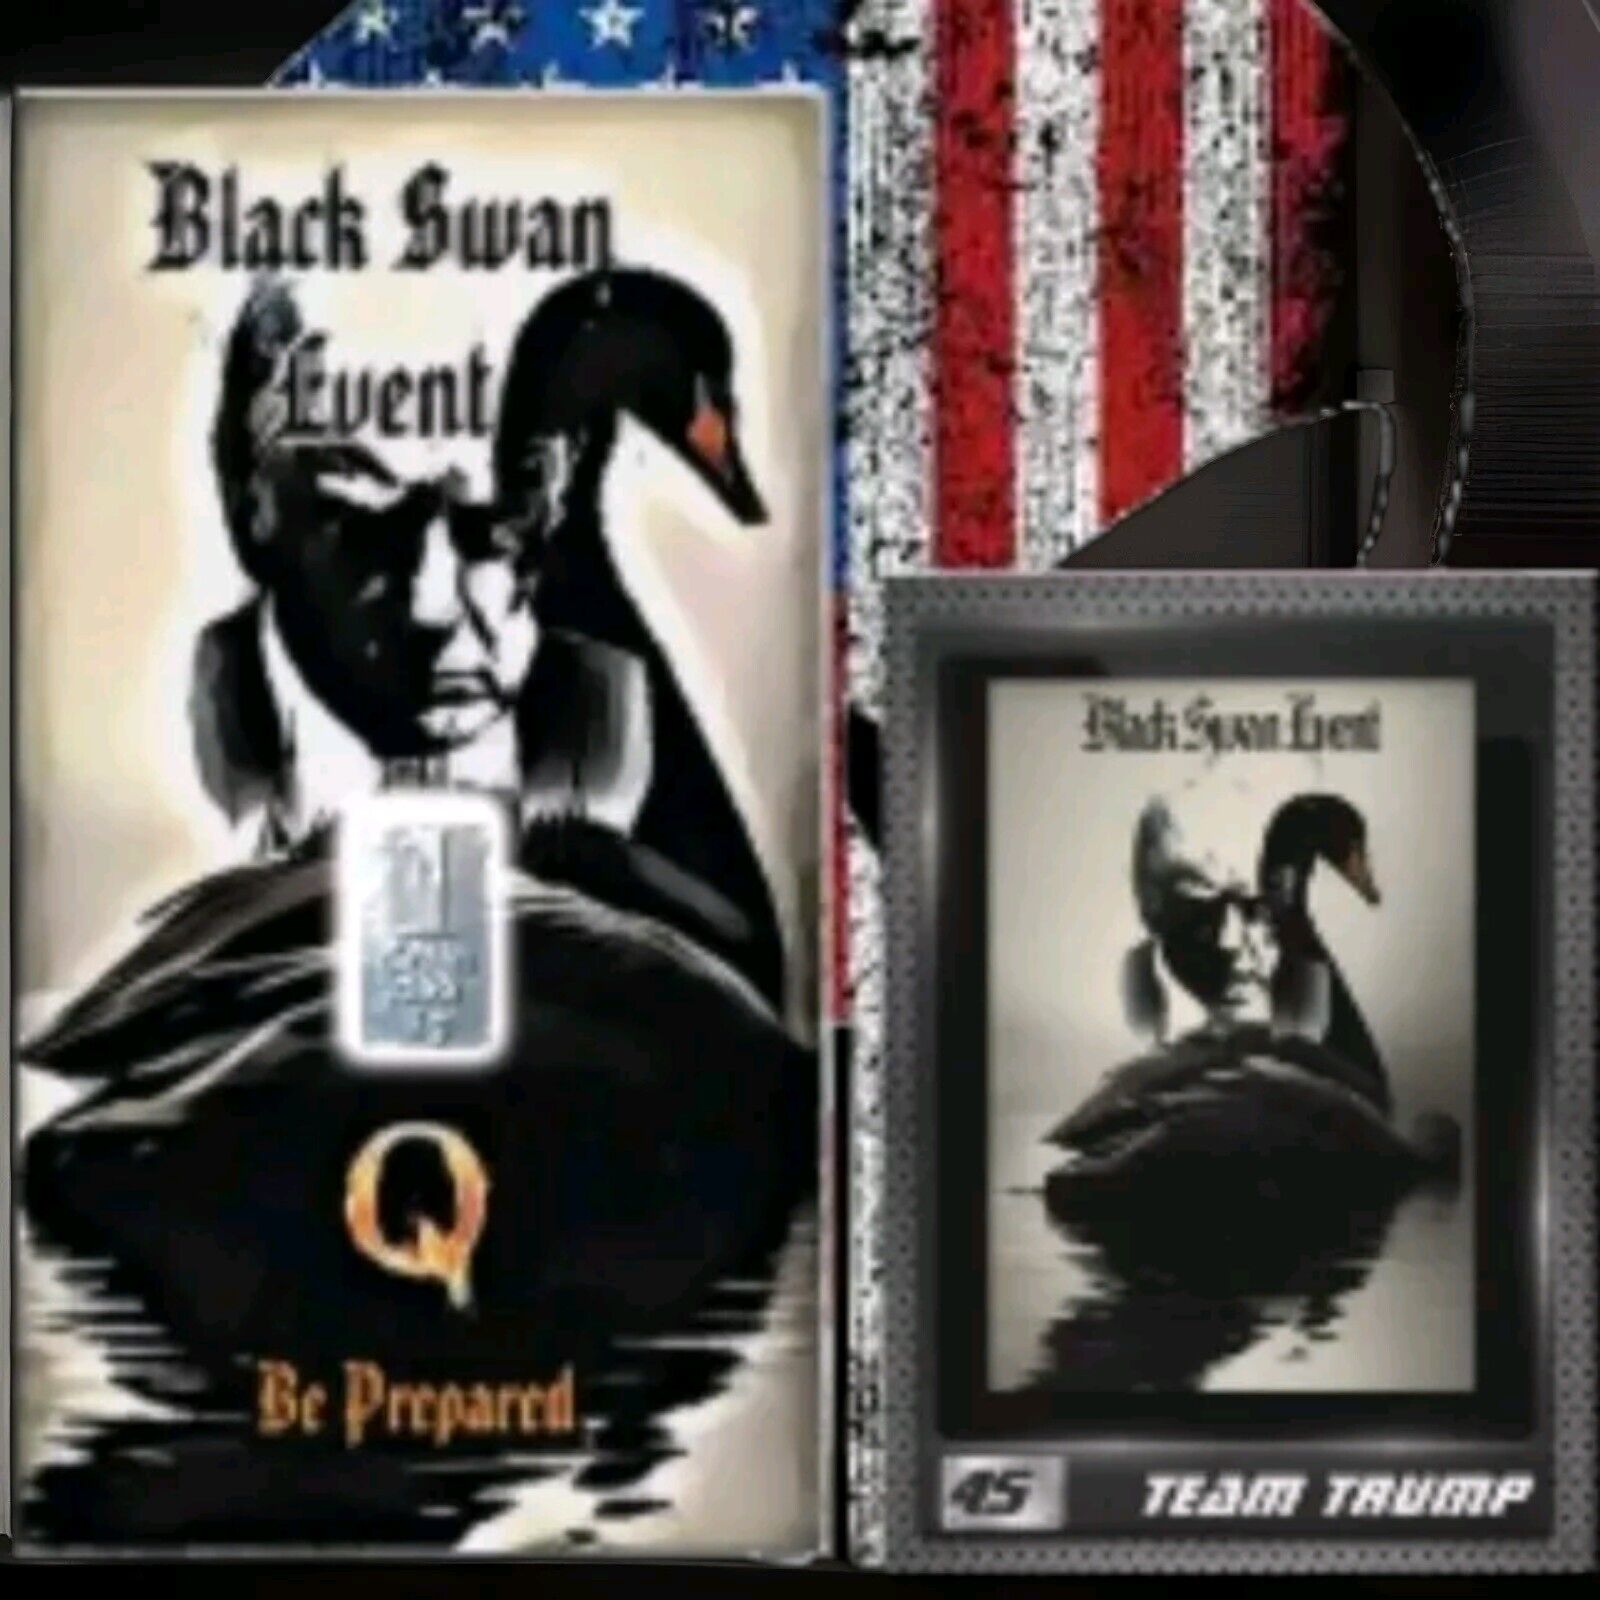 President Donald Trump Mugshot Black Swan Event Q Silver Bar Card & Trading Card